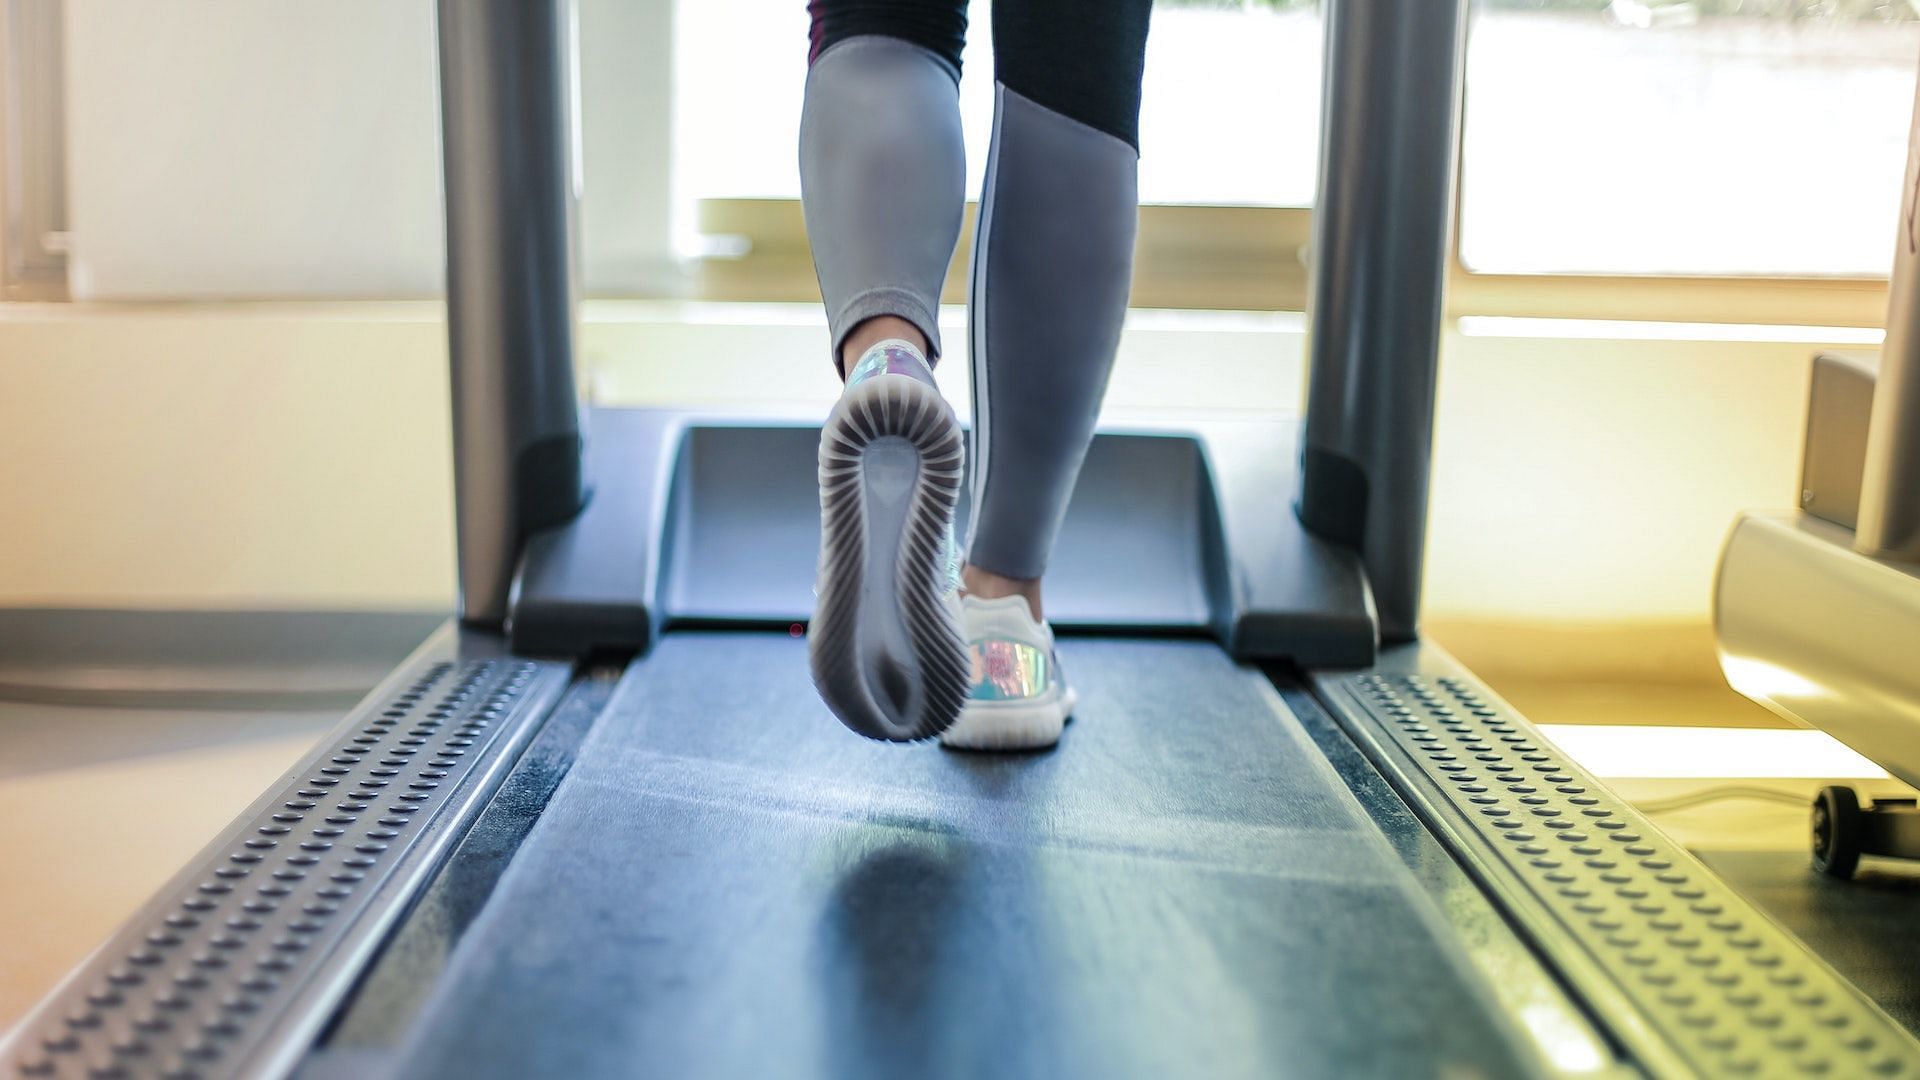 Treadmill runs may apply pressure to your joints. Image via Pexels/Andrea Piacquadio